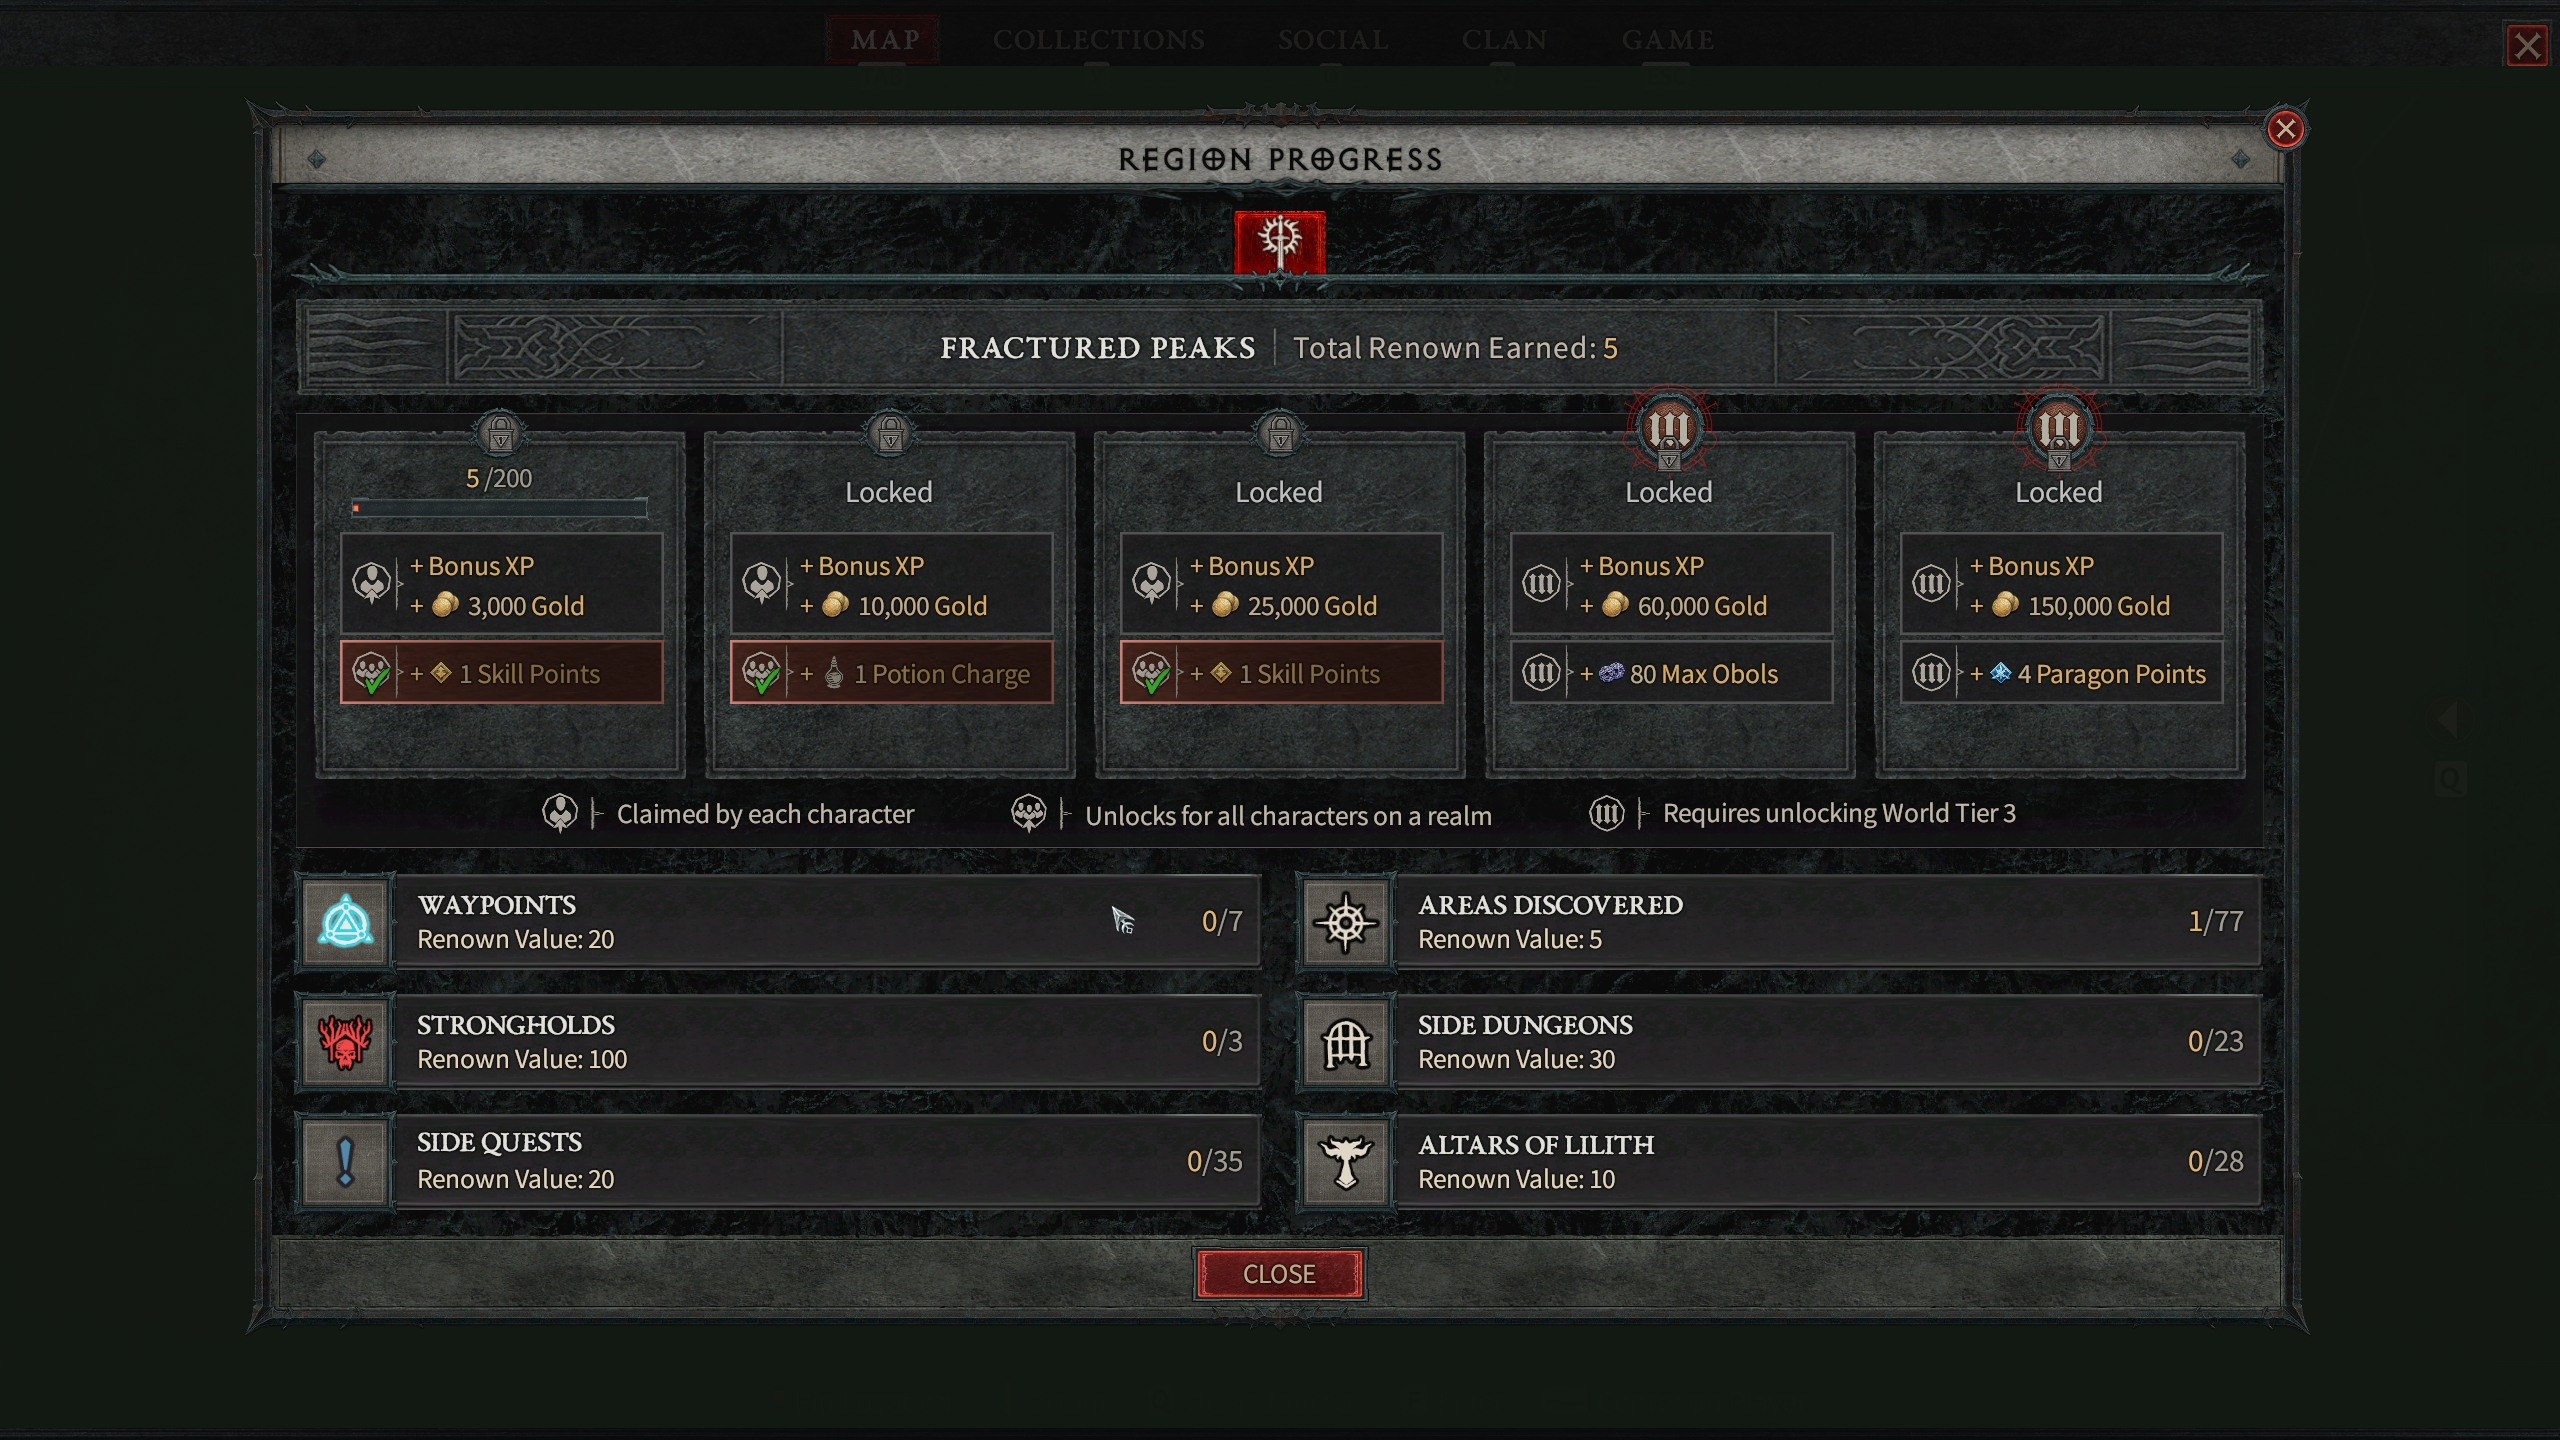 Diablo 4 - Fractured Peaks prestige screen showing 3 tiers of rewards unlocked